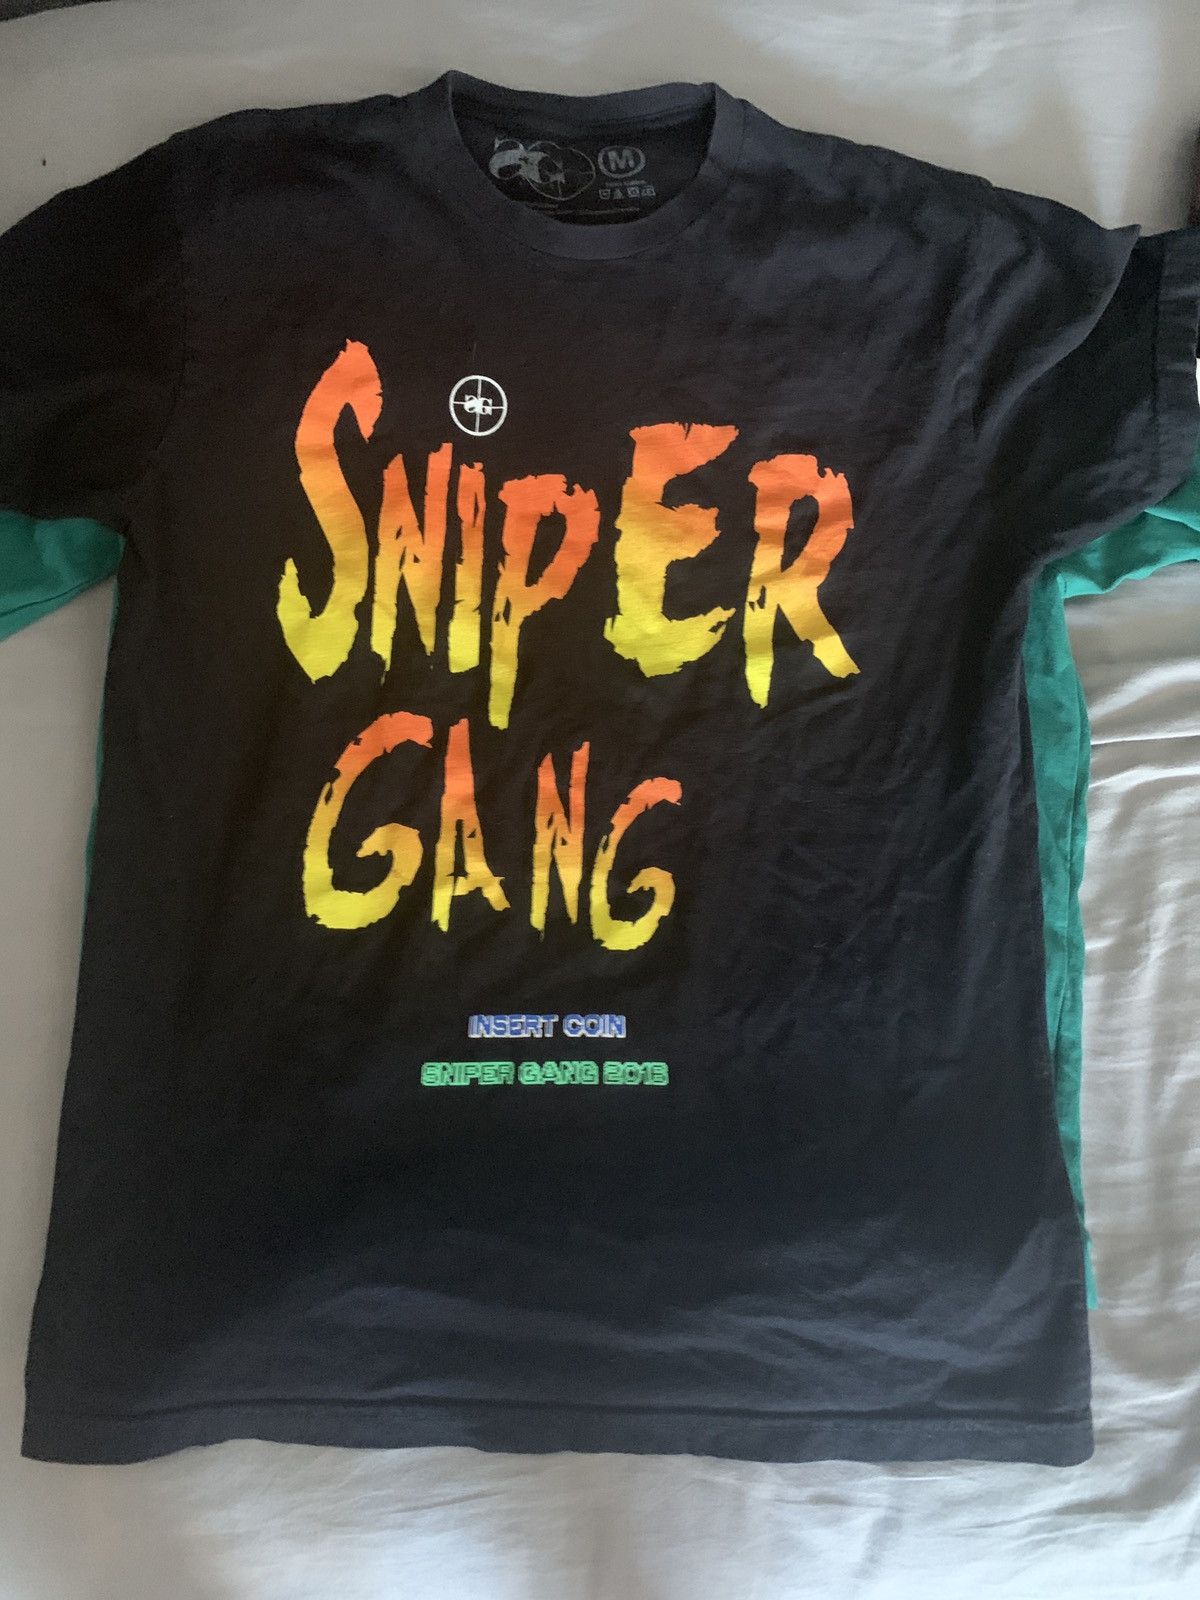 Sniper Gang sniper gang 2016 tee shirt Size US M / EU 48-50 / 2 - 1 Preview